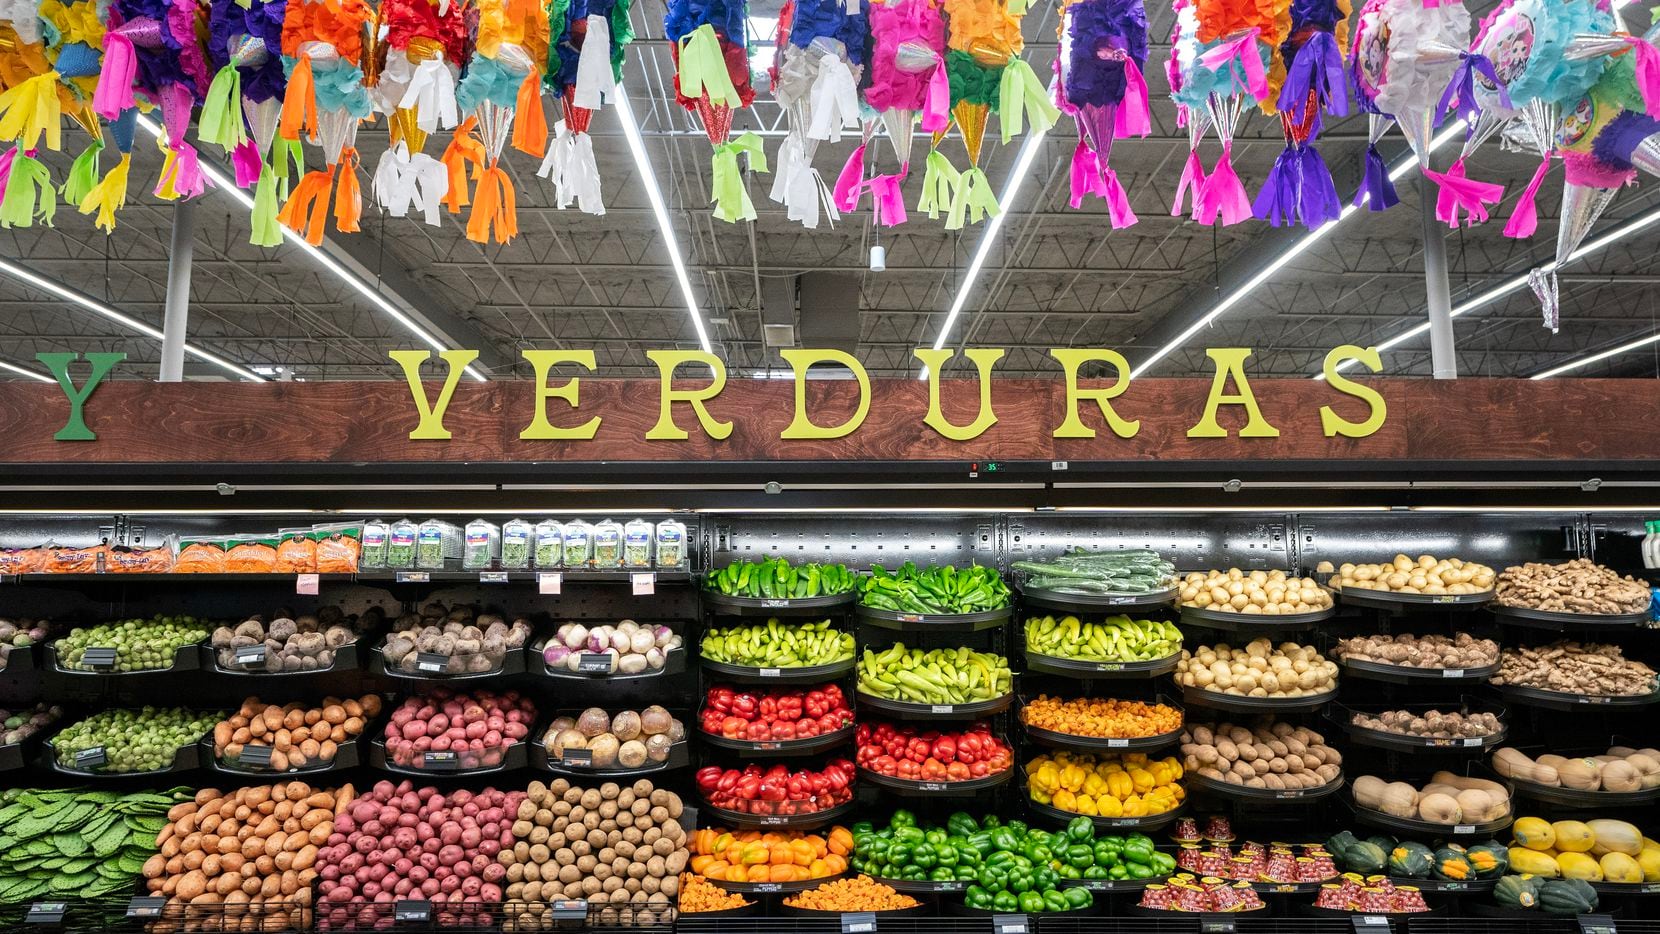 Piñatas hang above shelves stocked with vegetables in a new El Rio Grande Latin Market...